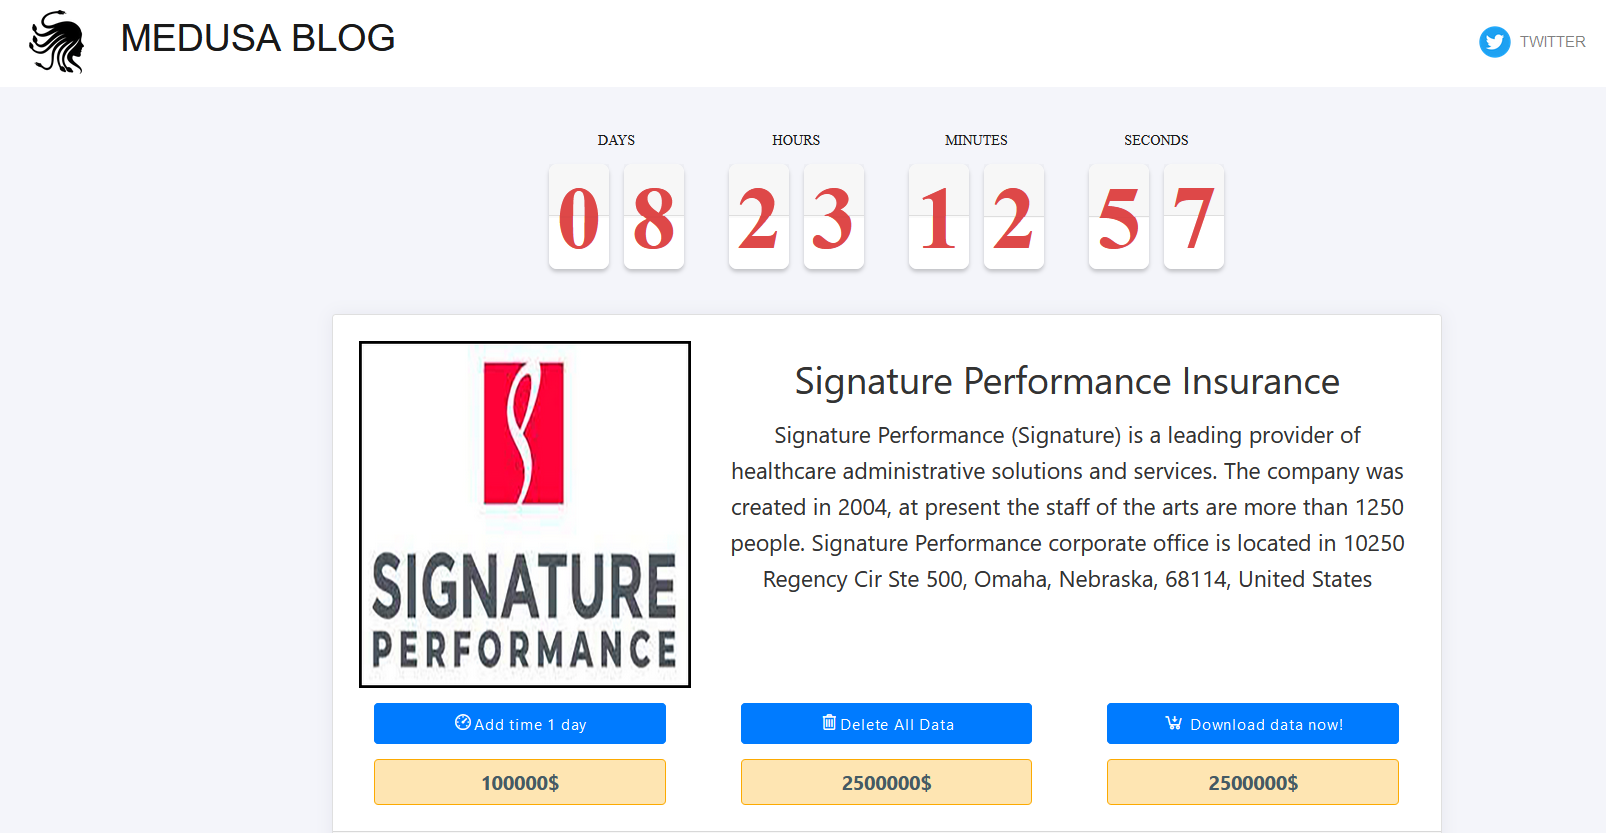 Signature Performance Insurance